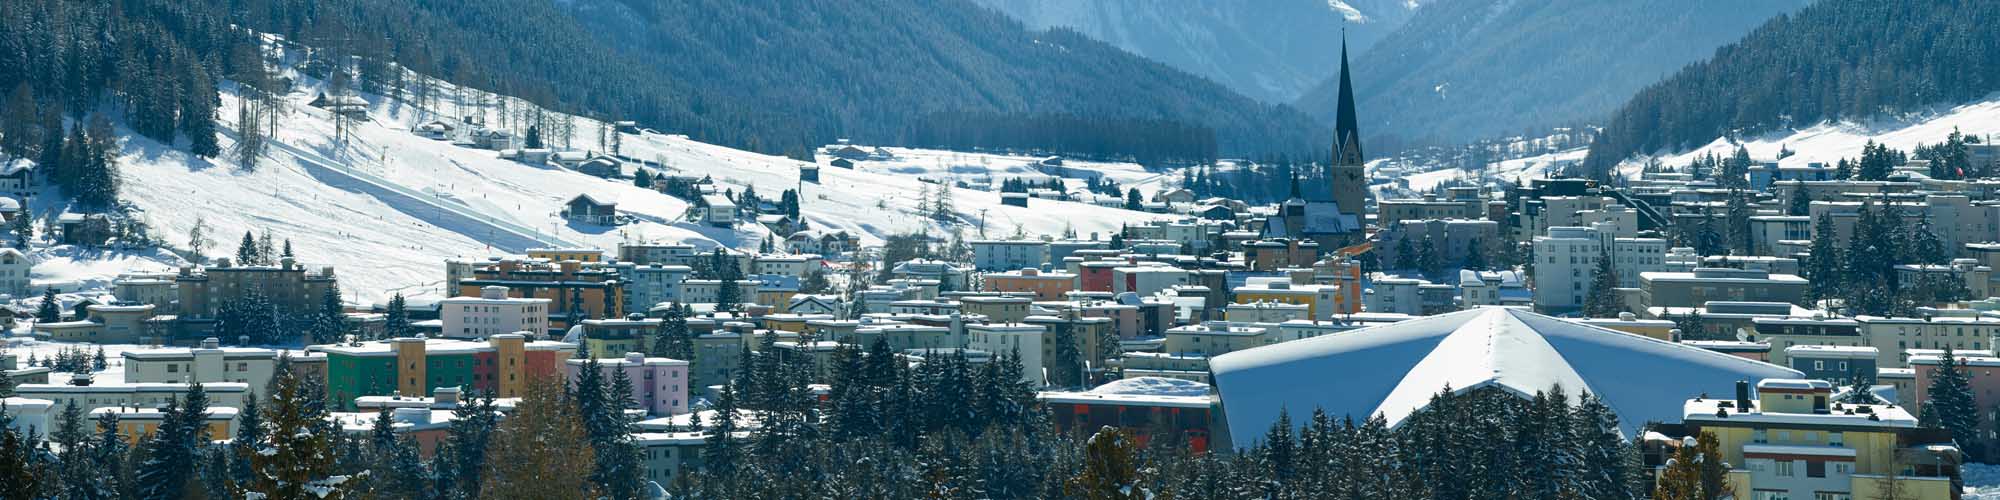 Hotel Davos - Davos - im Winter